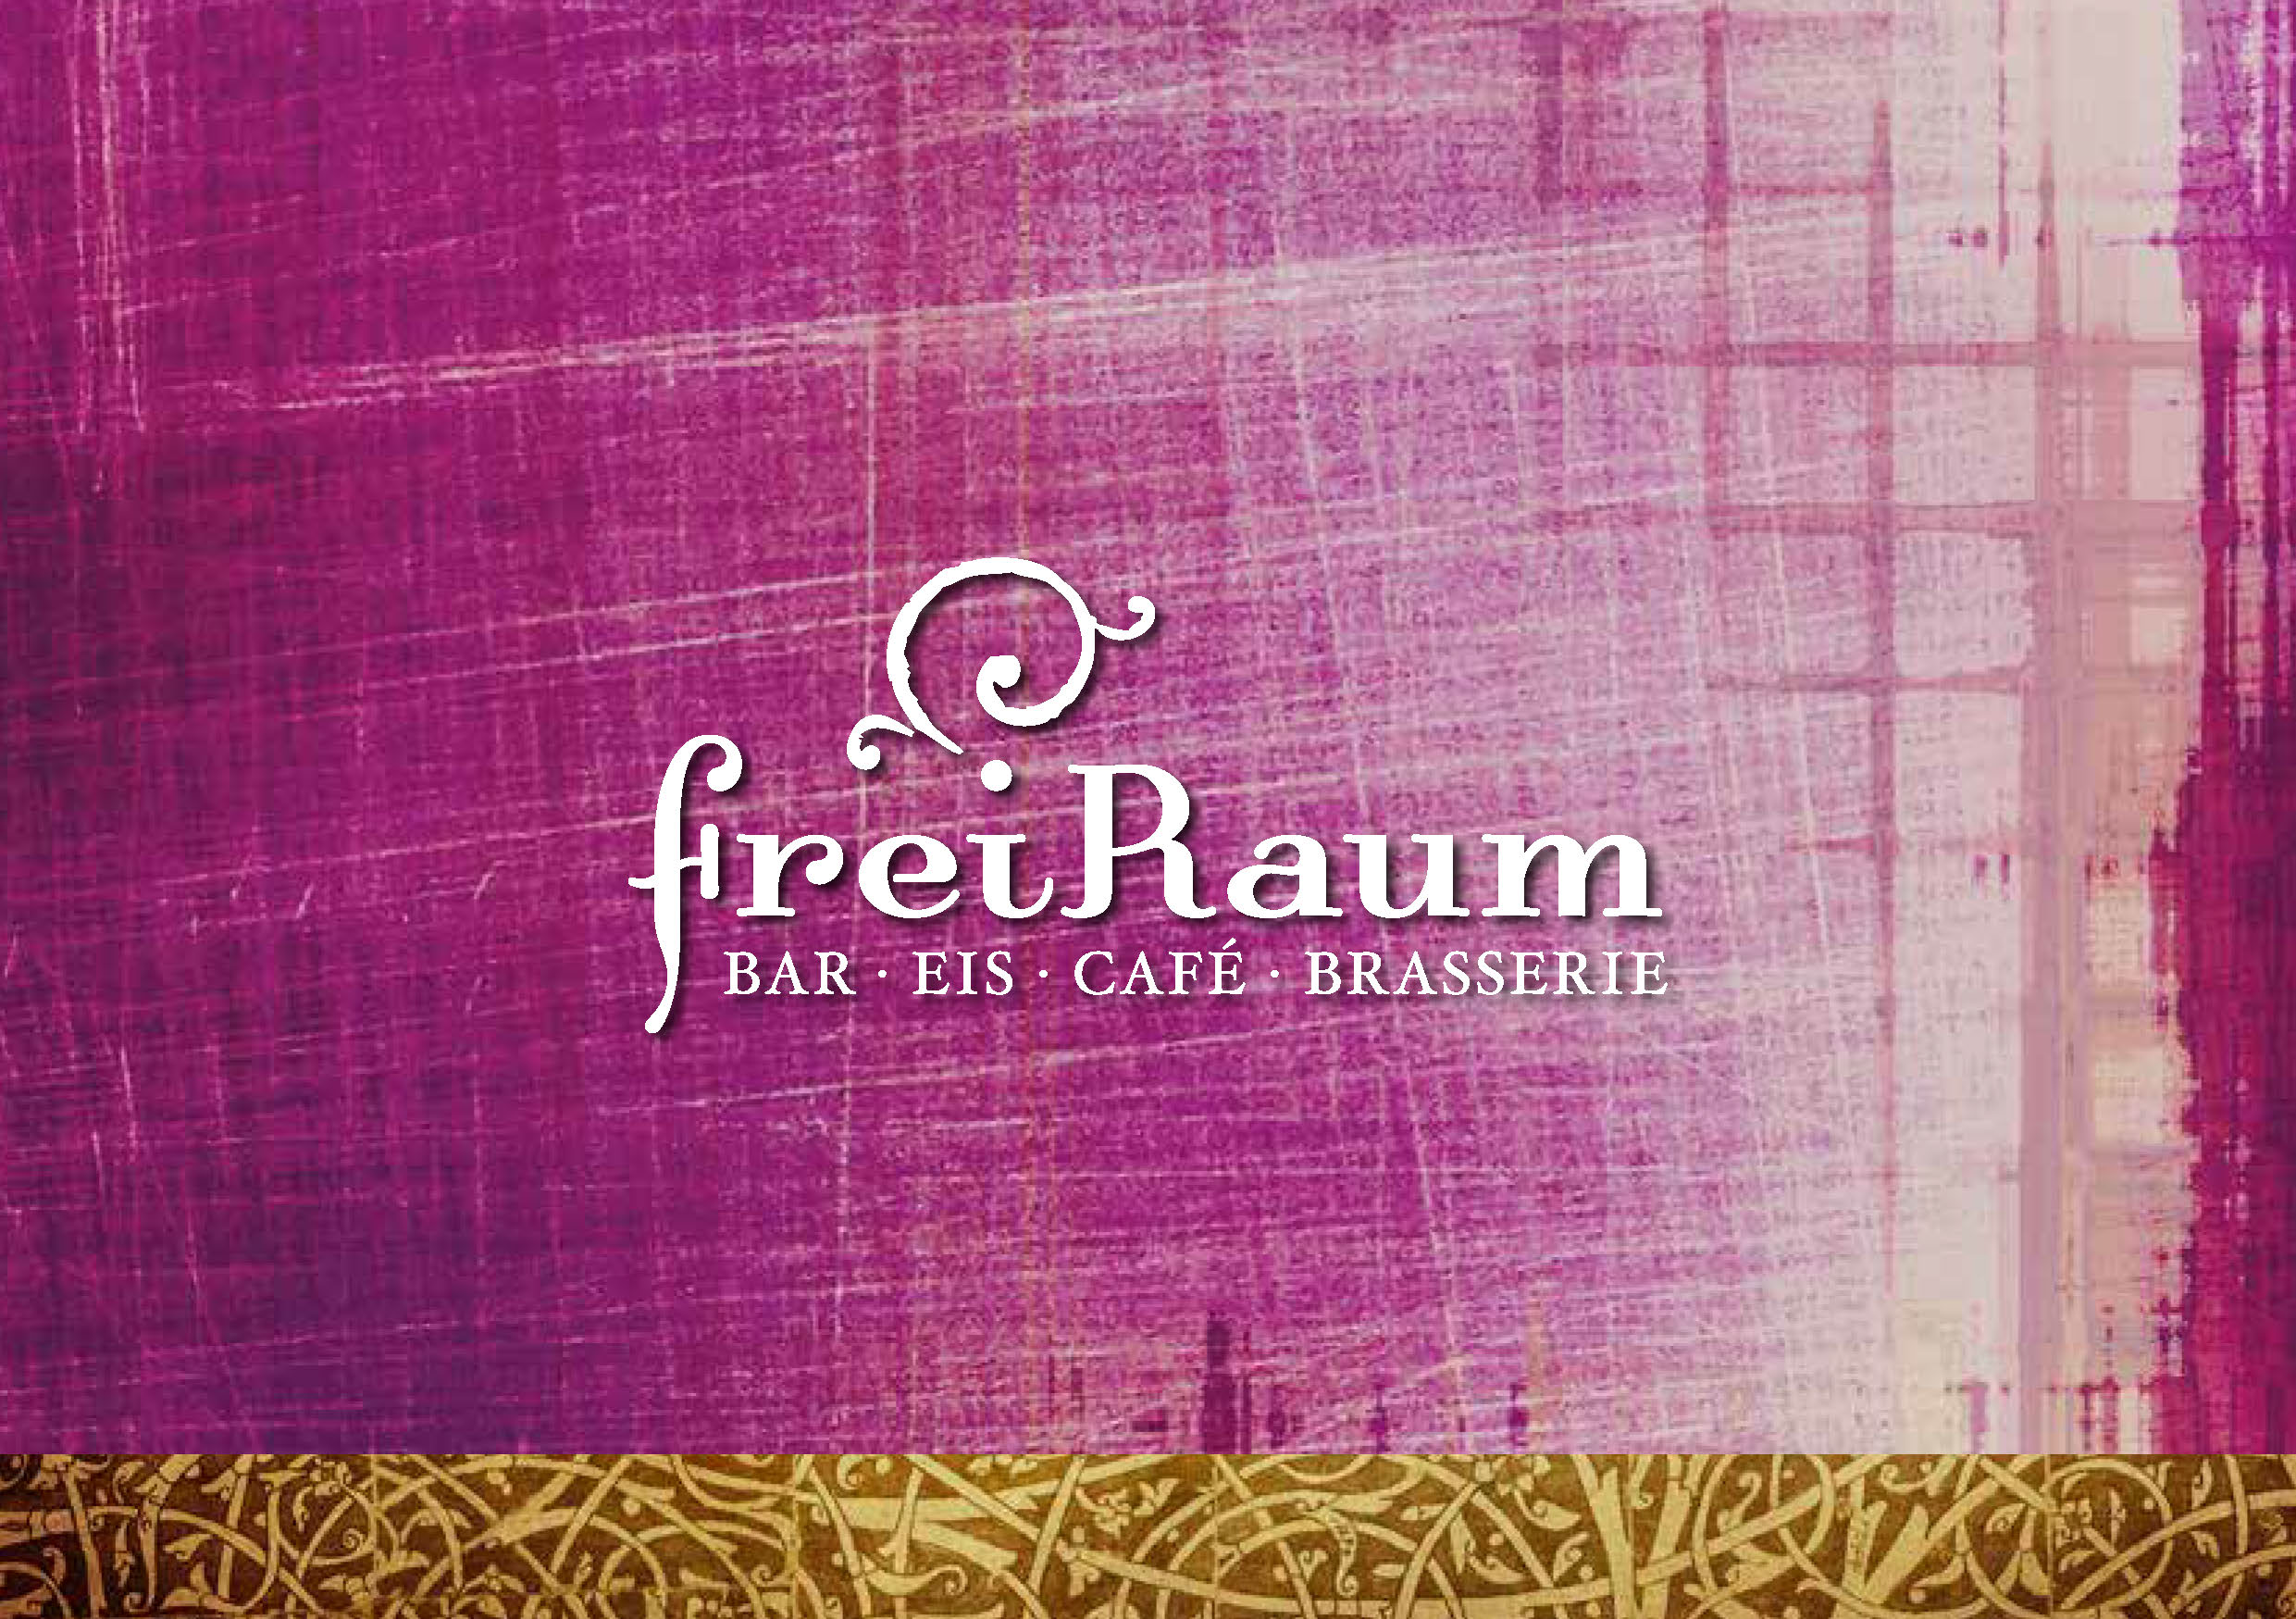 freiRaum - Bar, Eis, Café, Brasserie